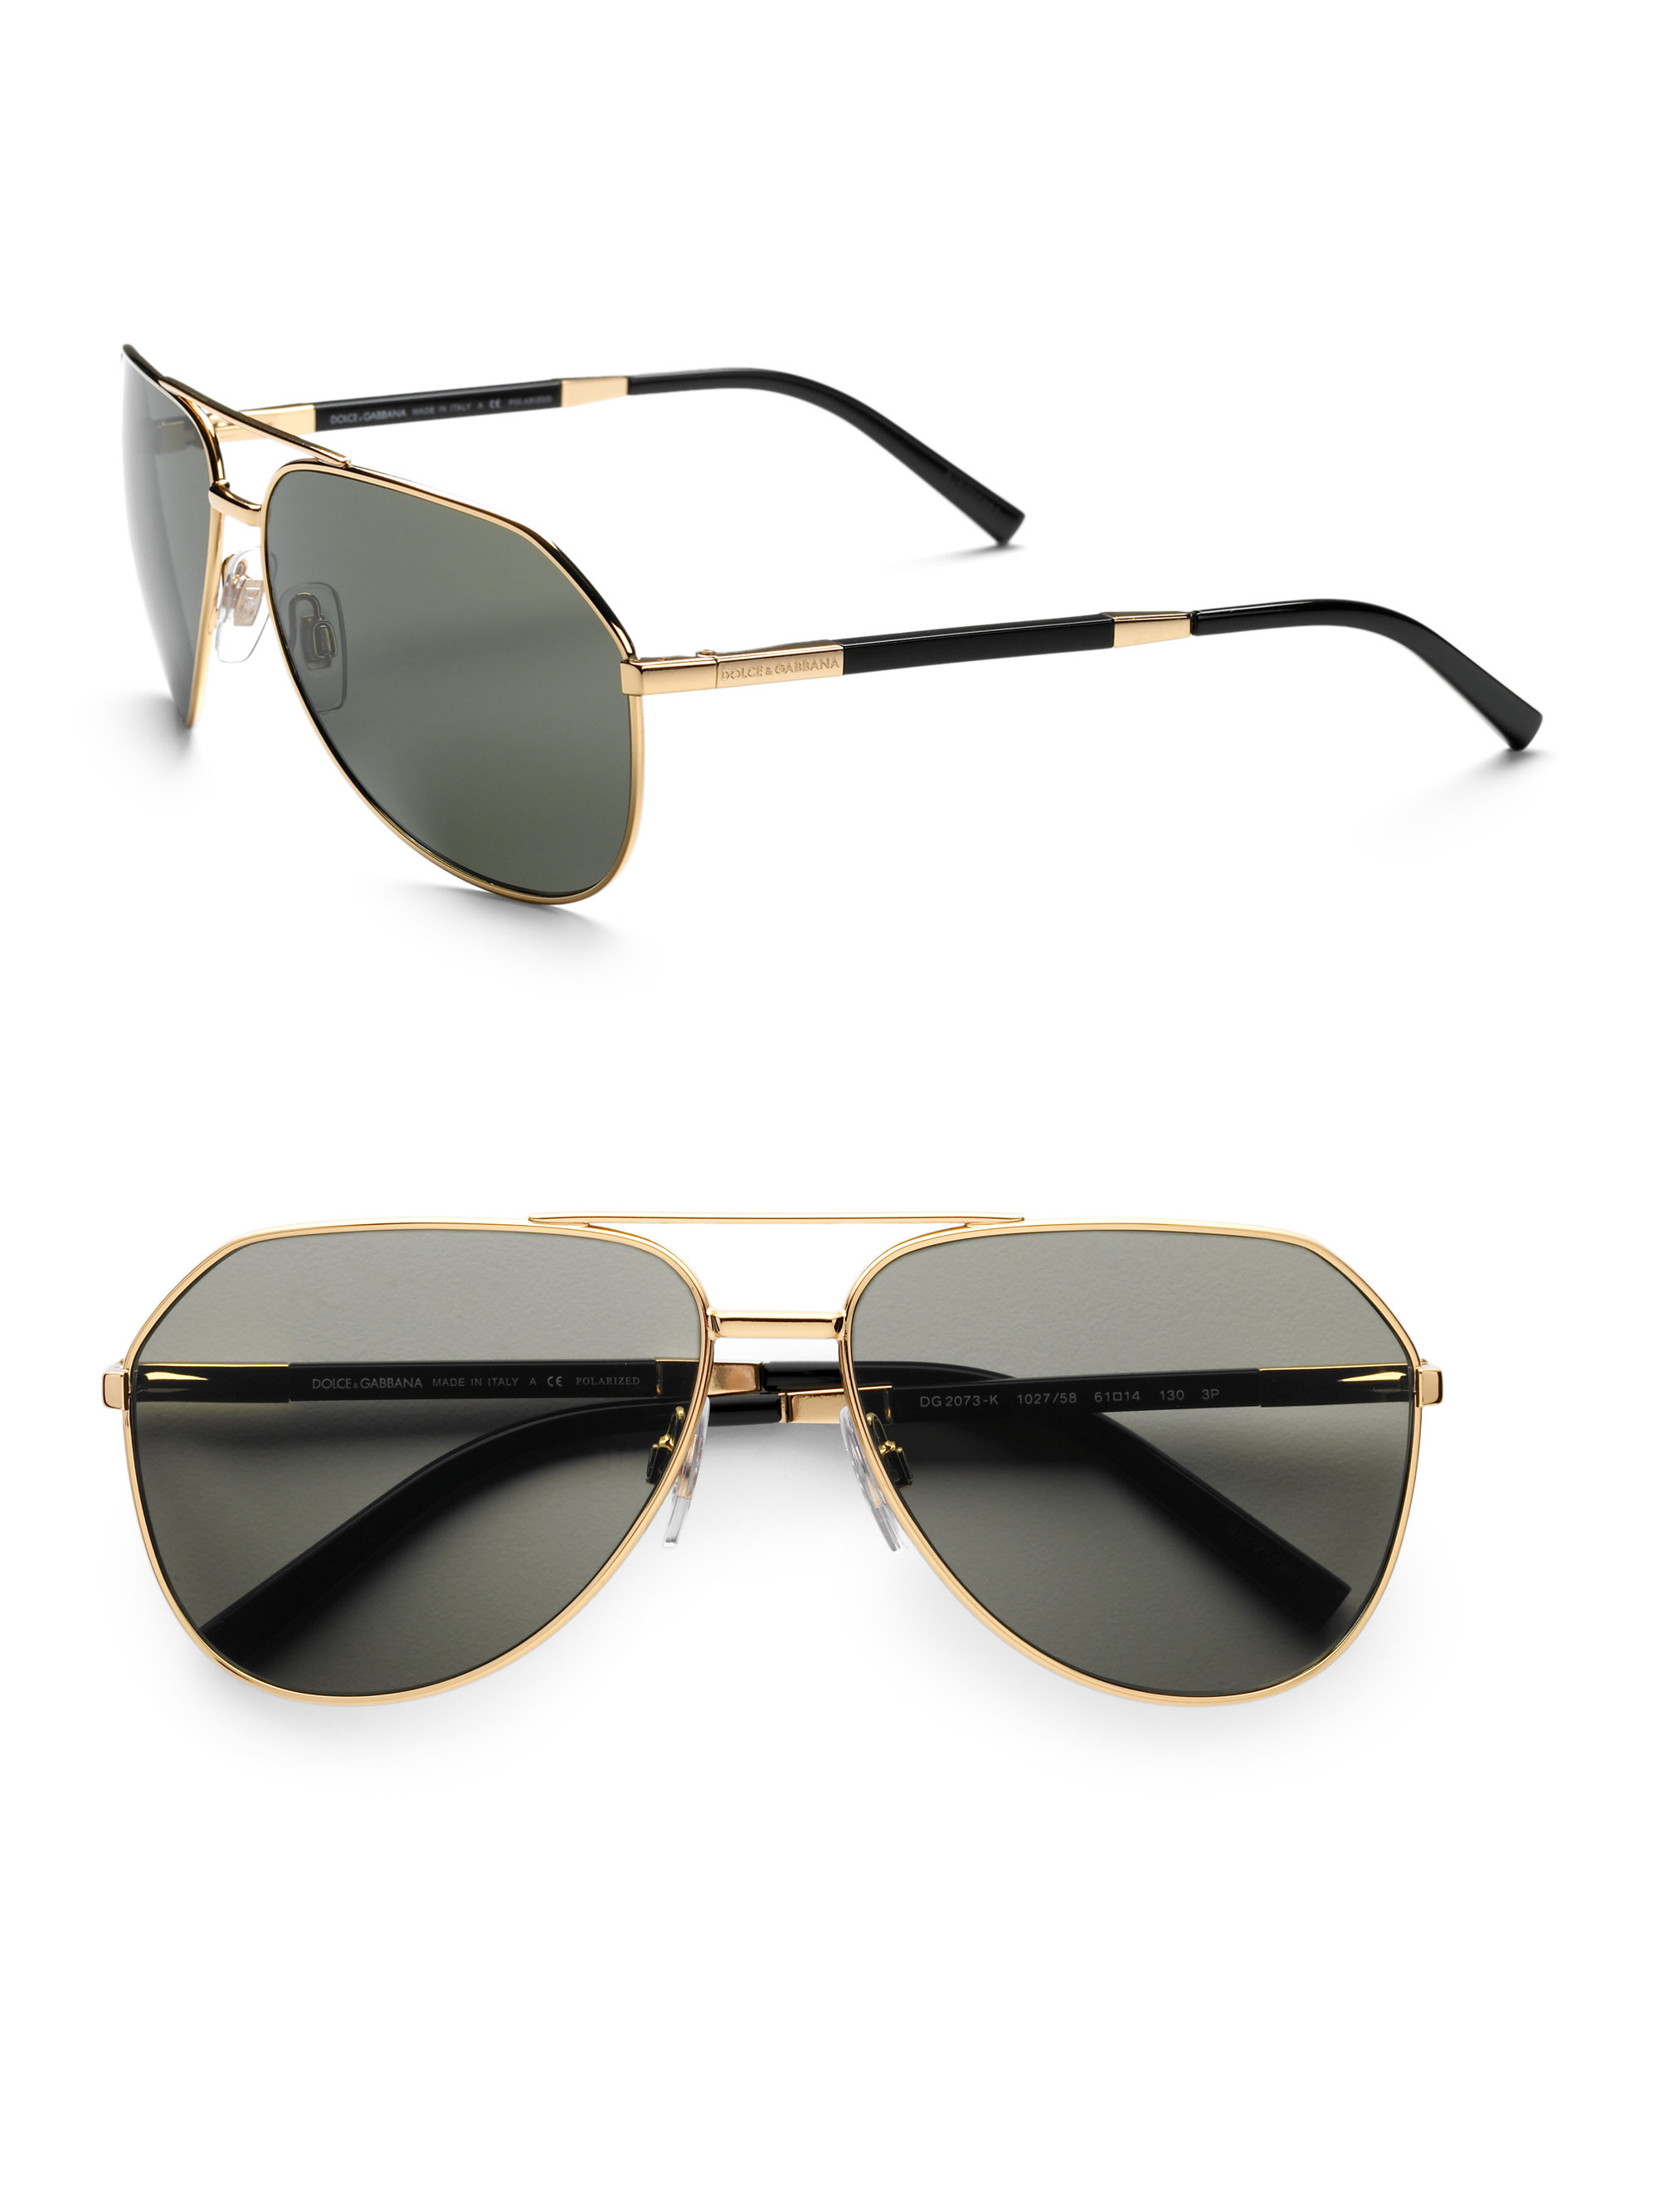 dolce gabbana limited edition sunglasses